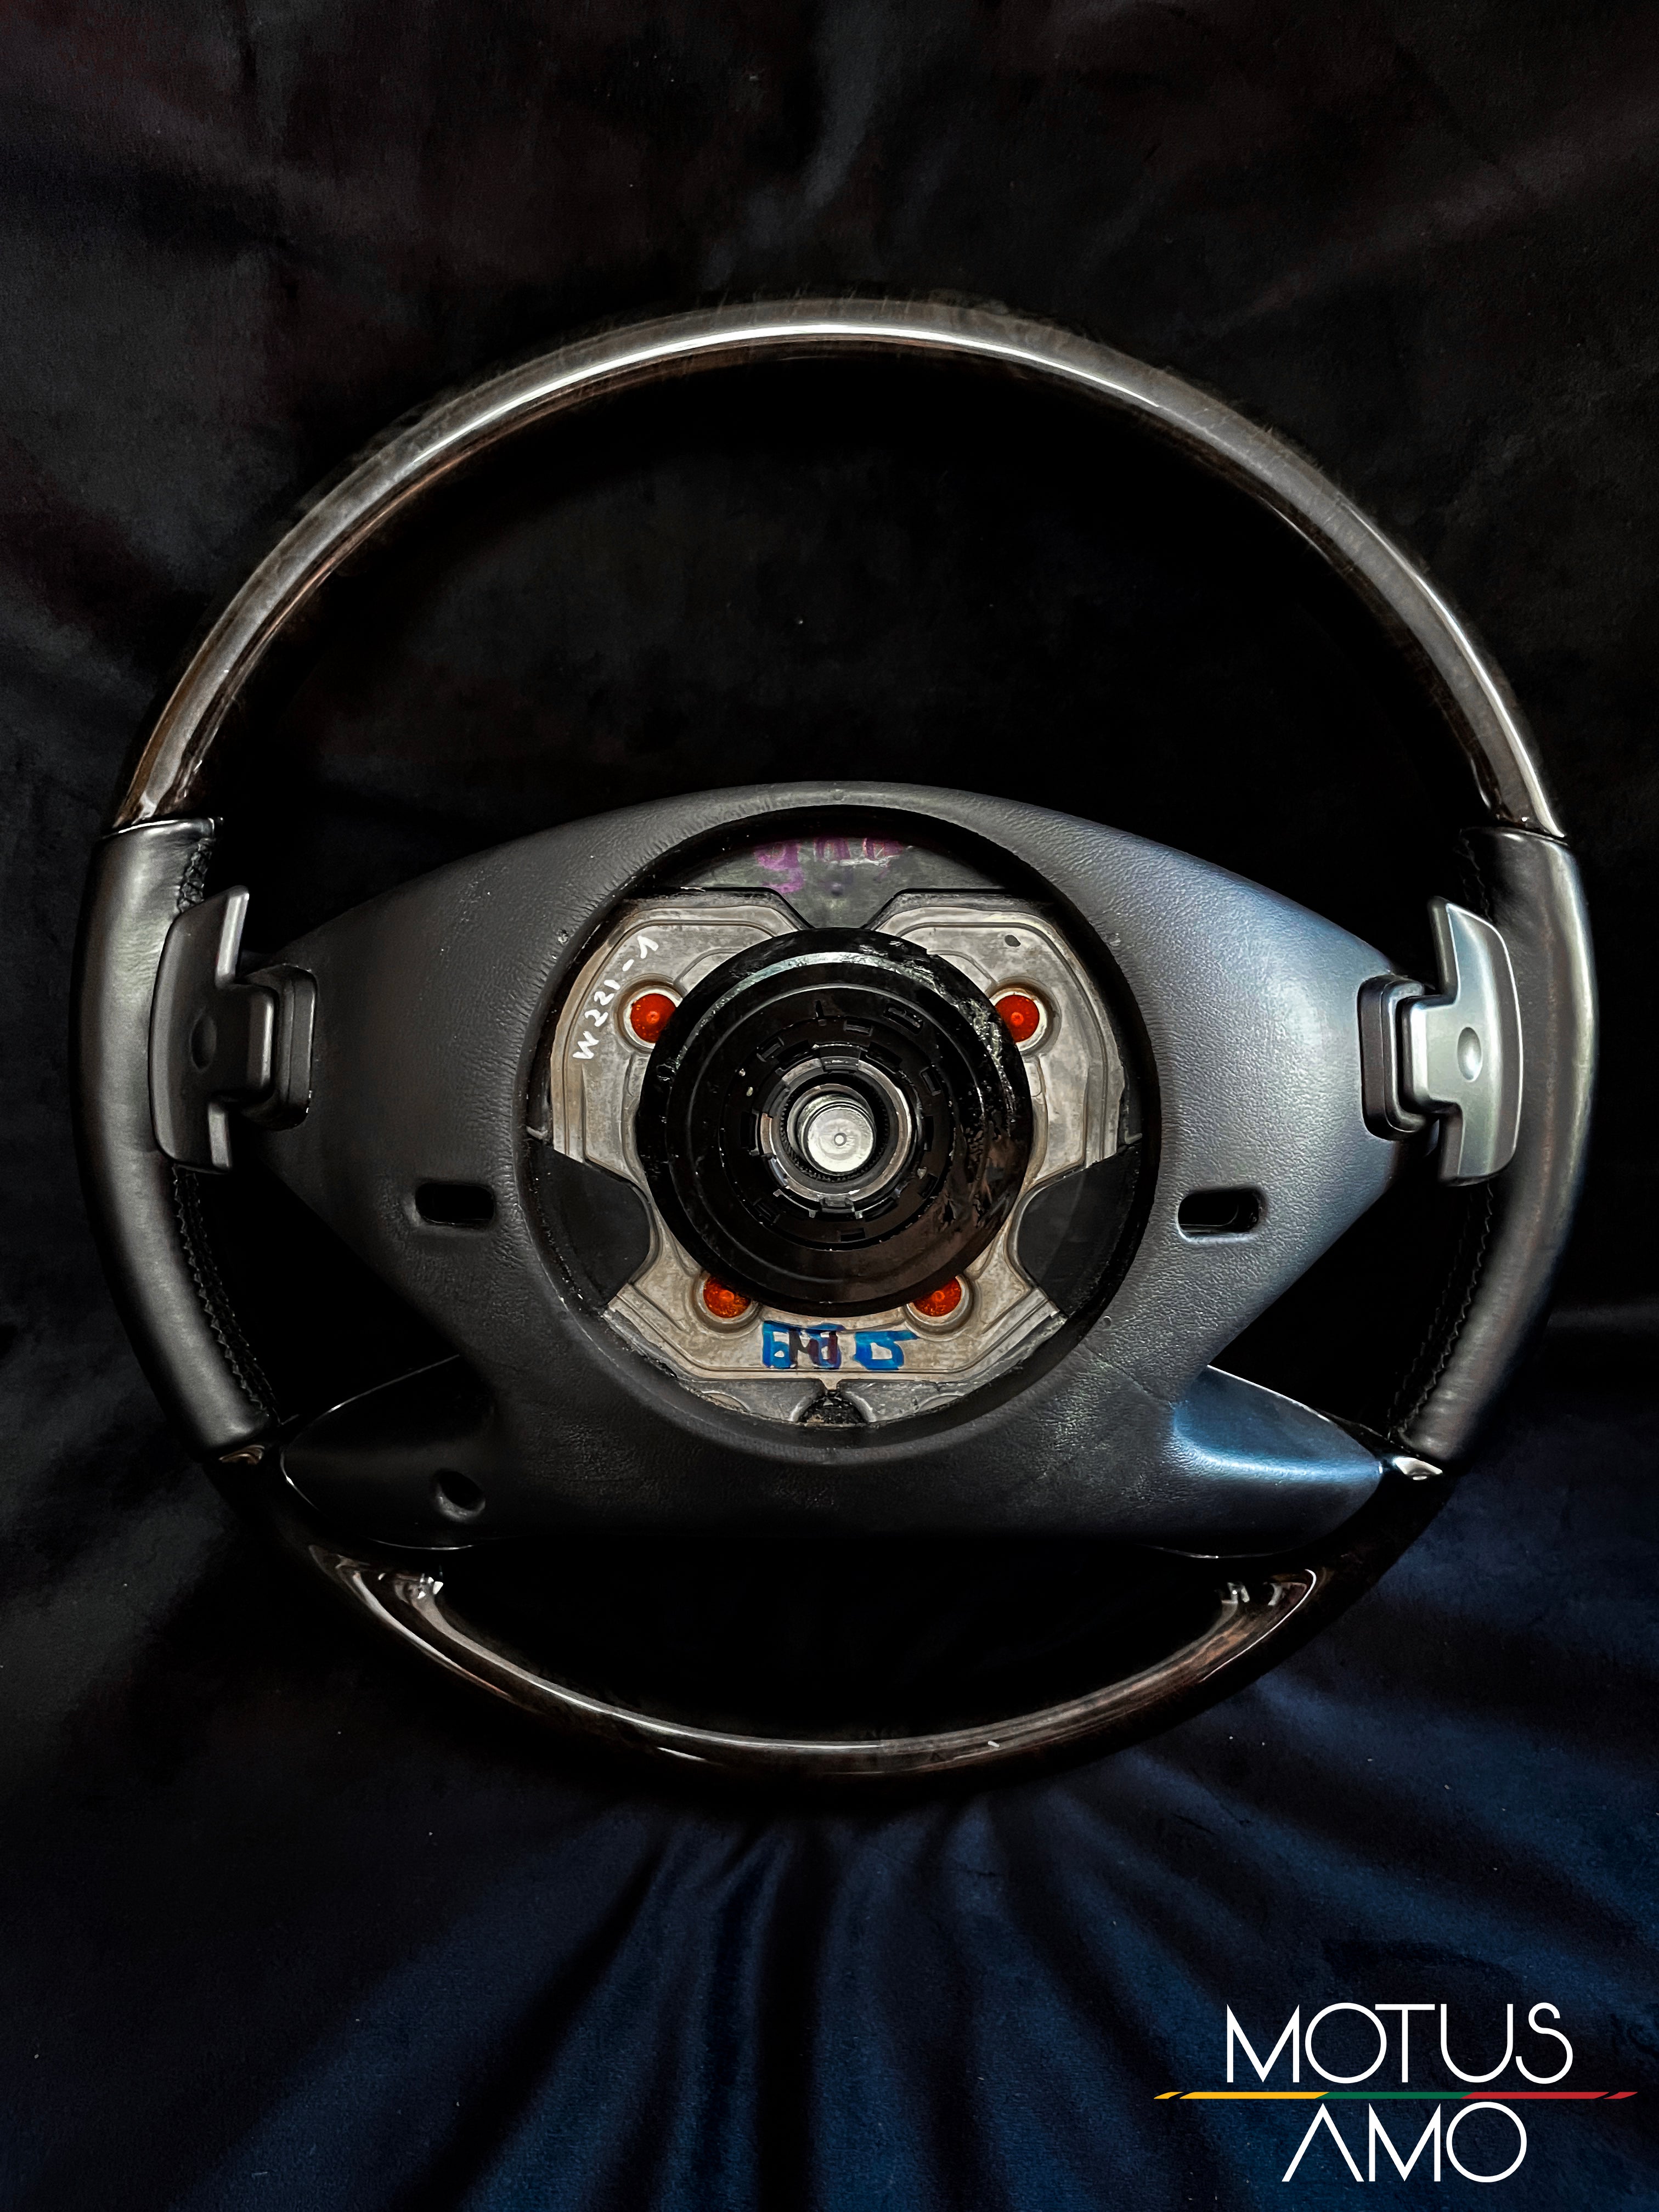 Mercedes Benz Genuine W221 W216 steering wheel  Motus Amo